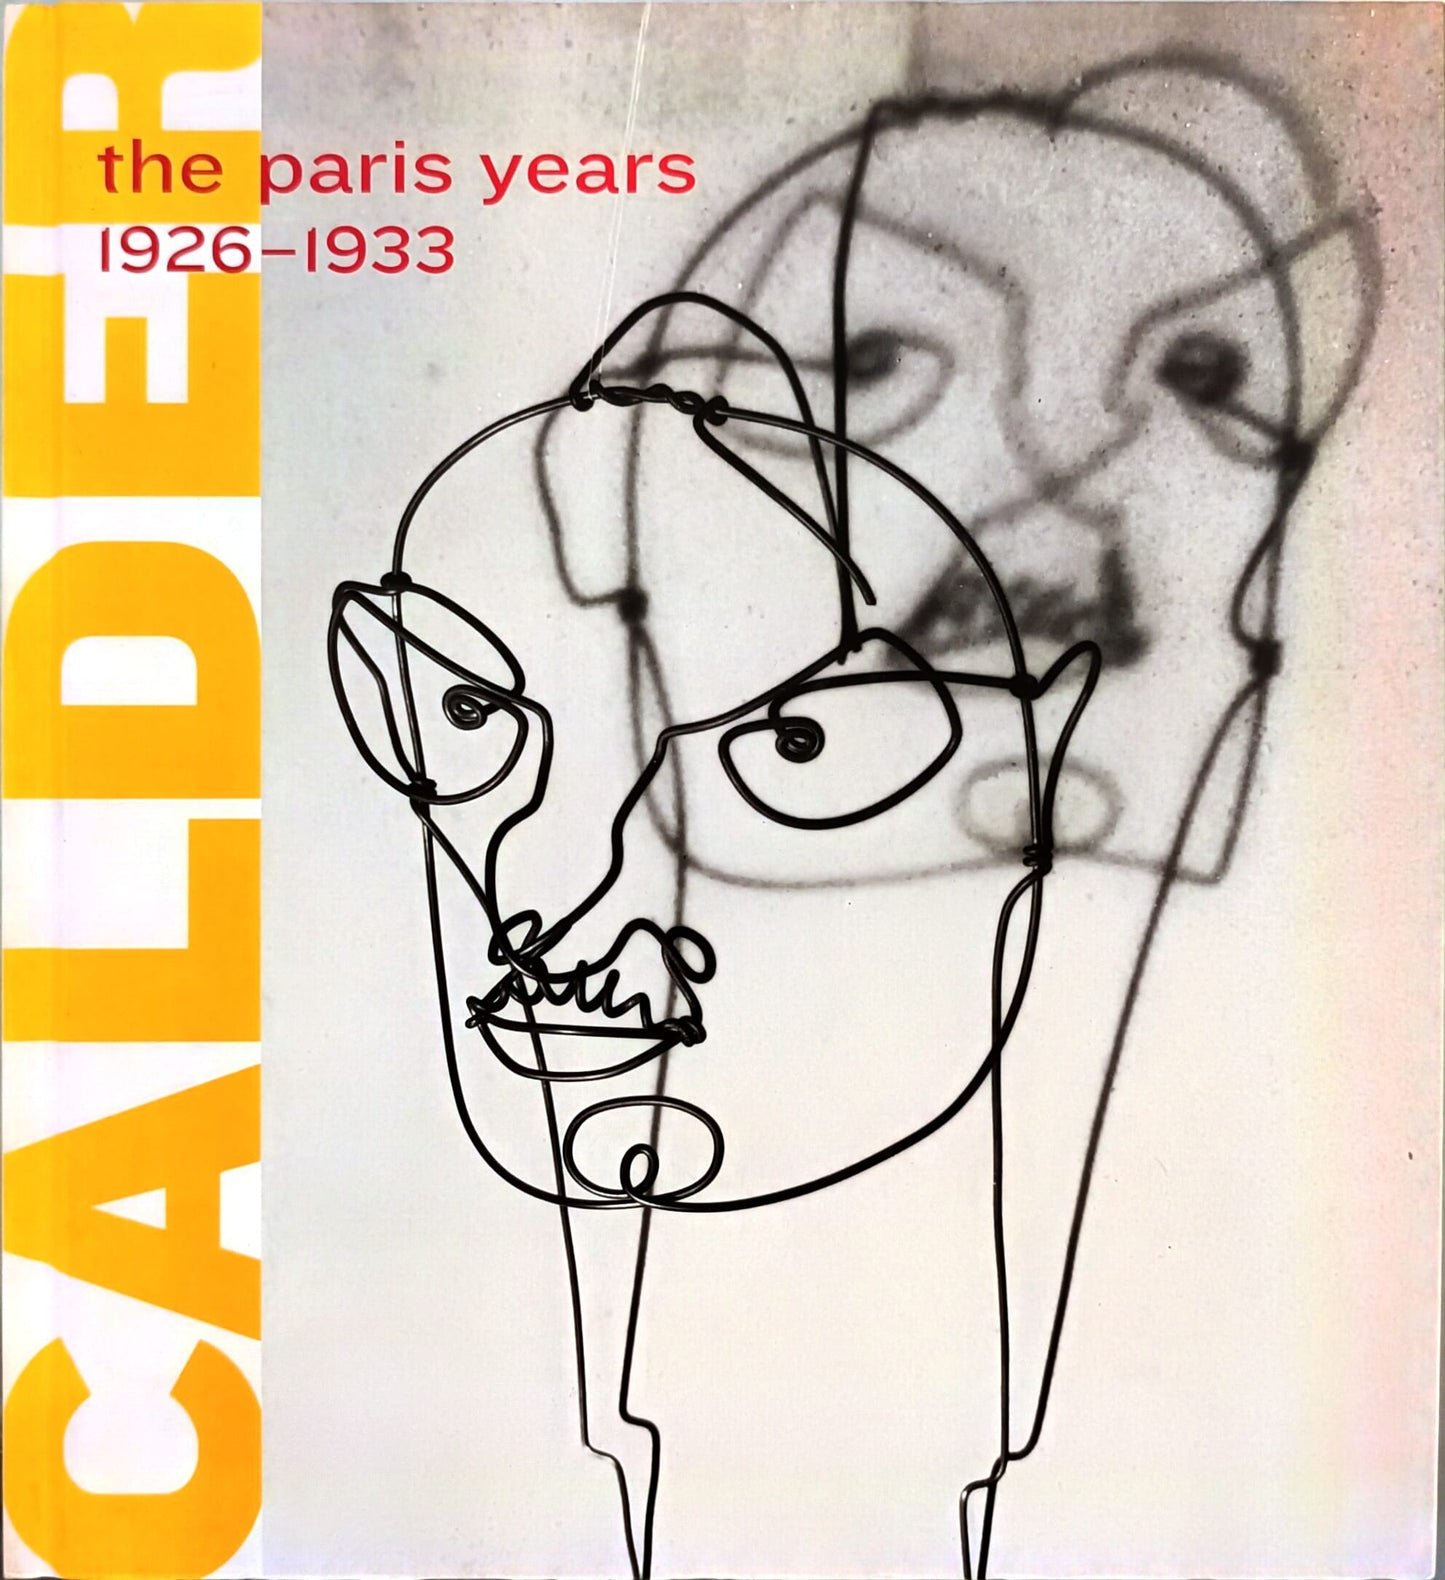 CALDER The Paris years 1926-1933